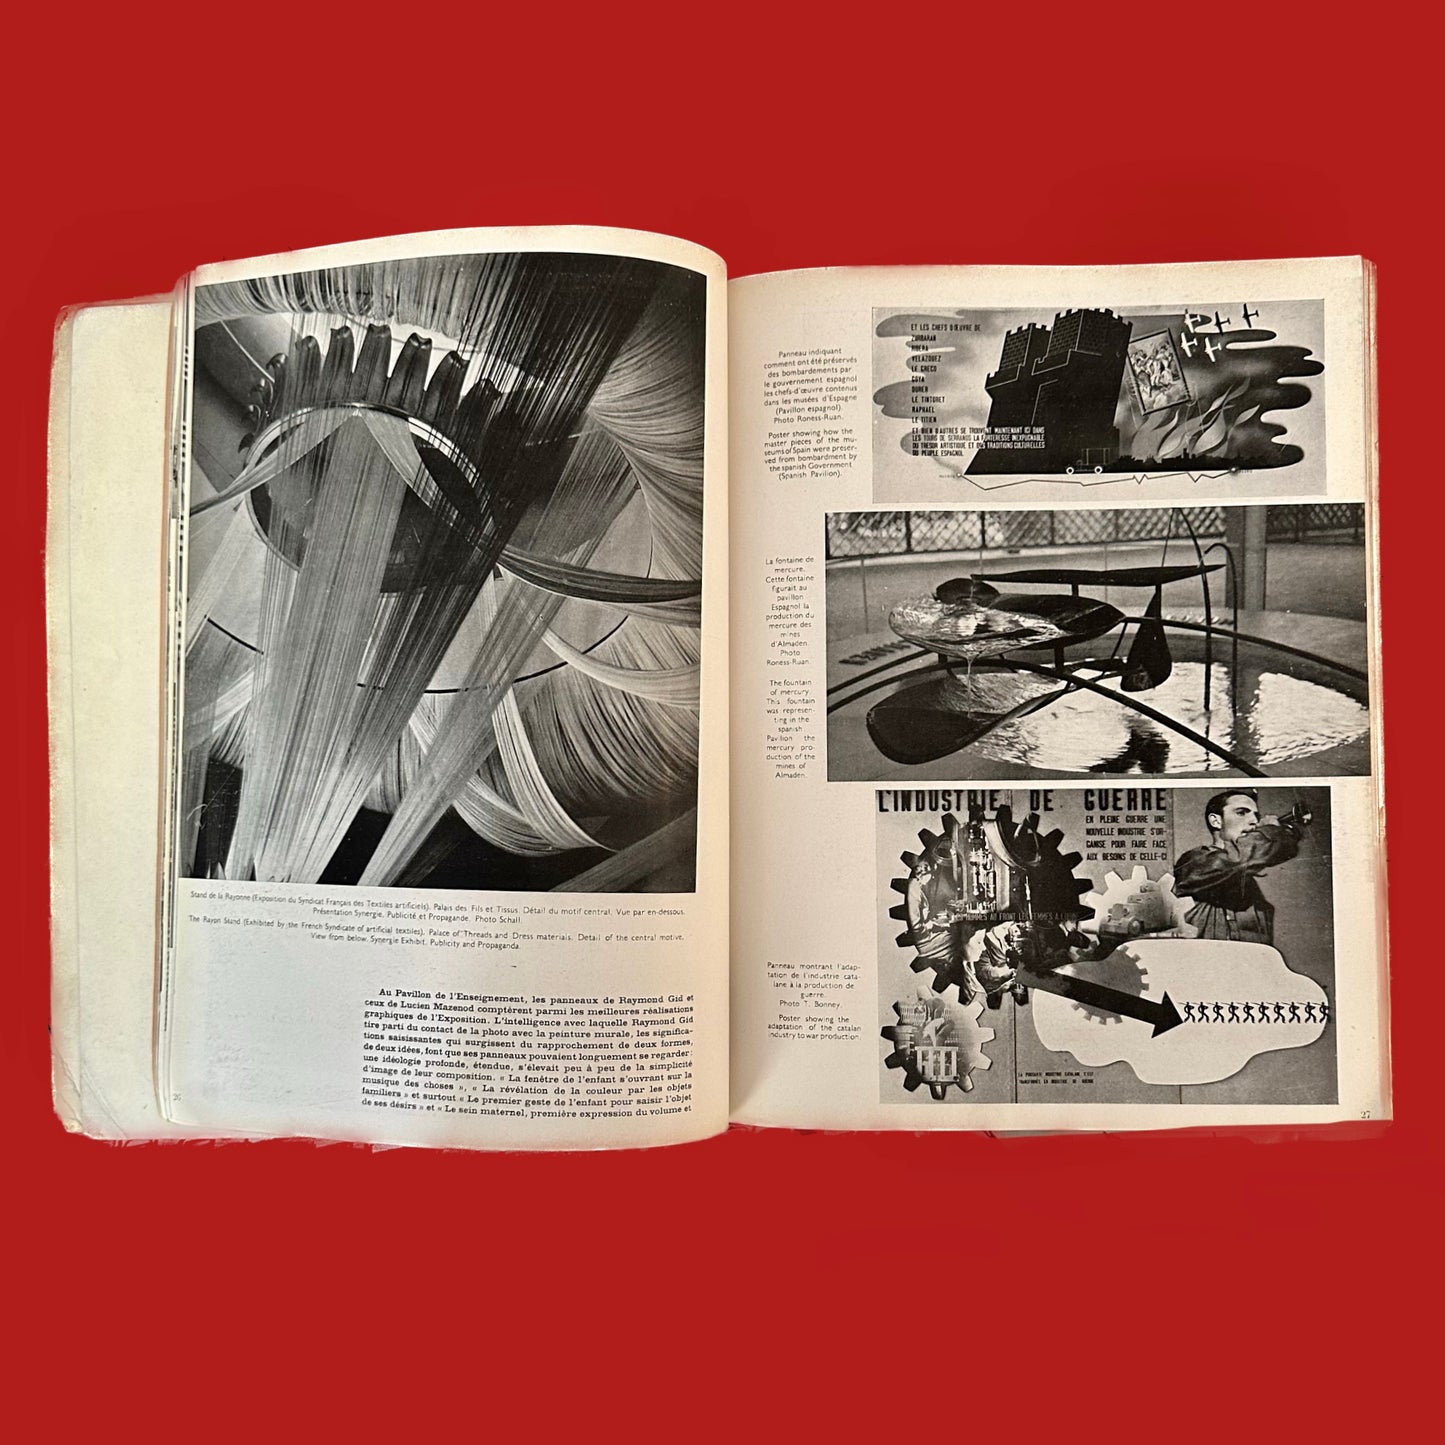 Expositions Internationales, Arts et Metiers Graphiques 1939